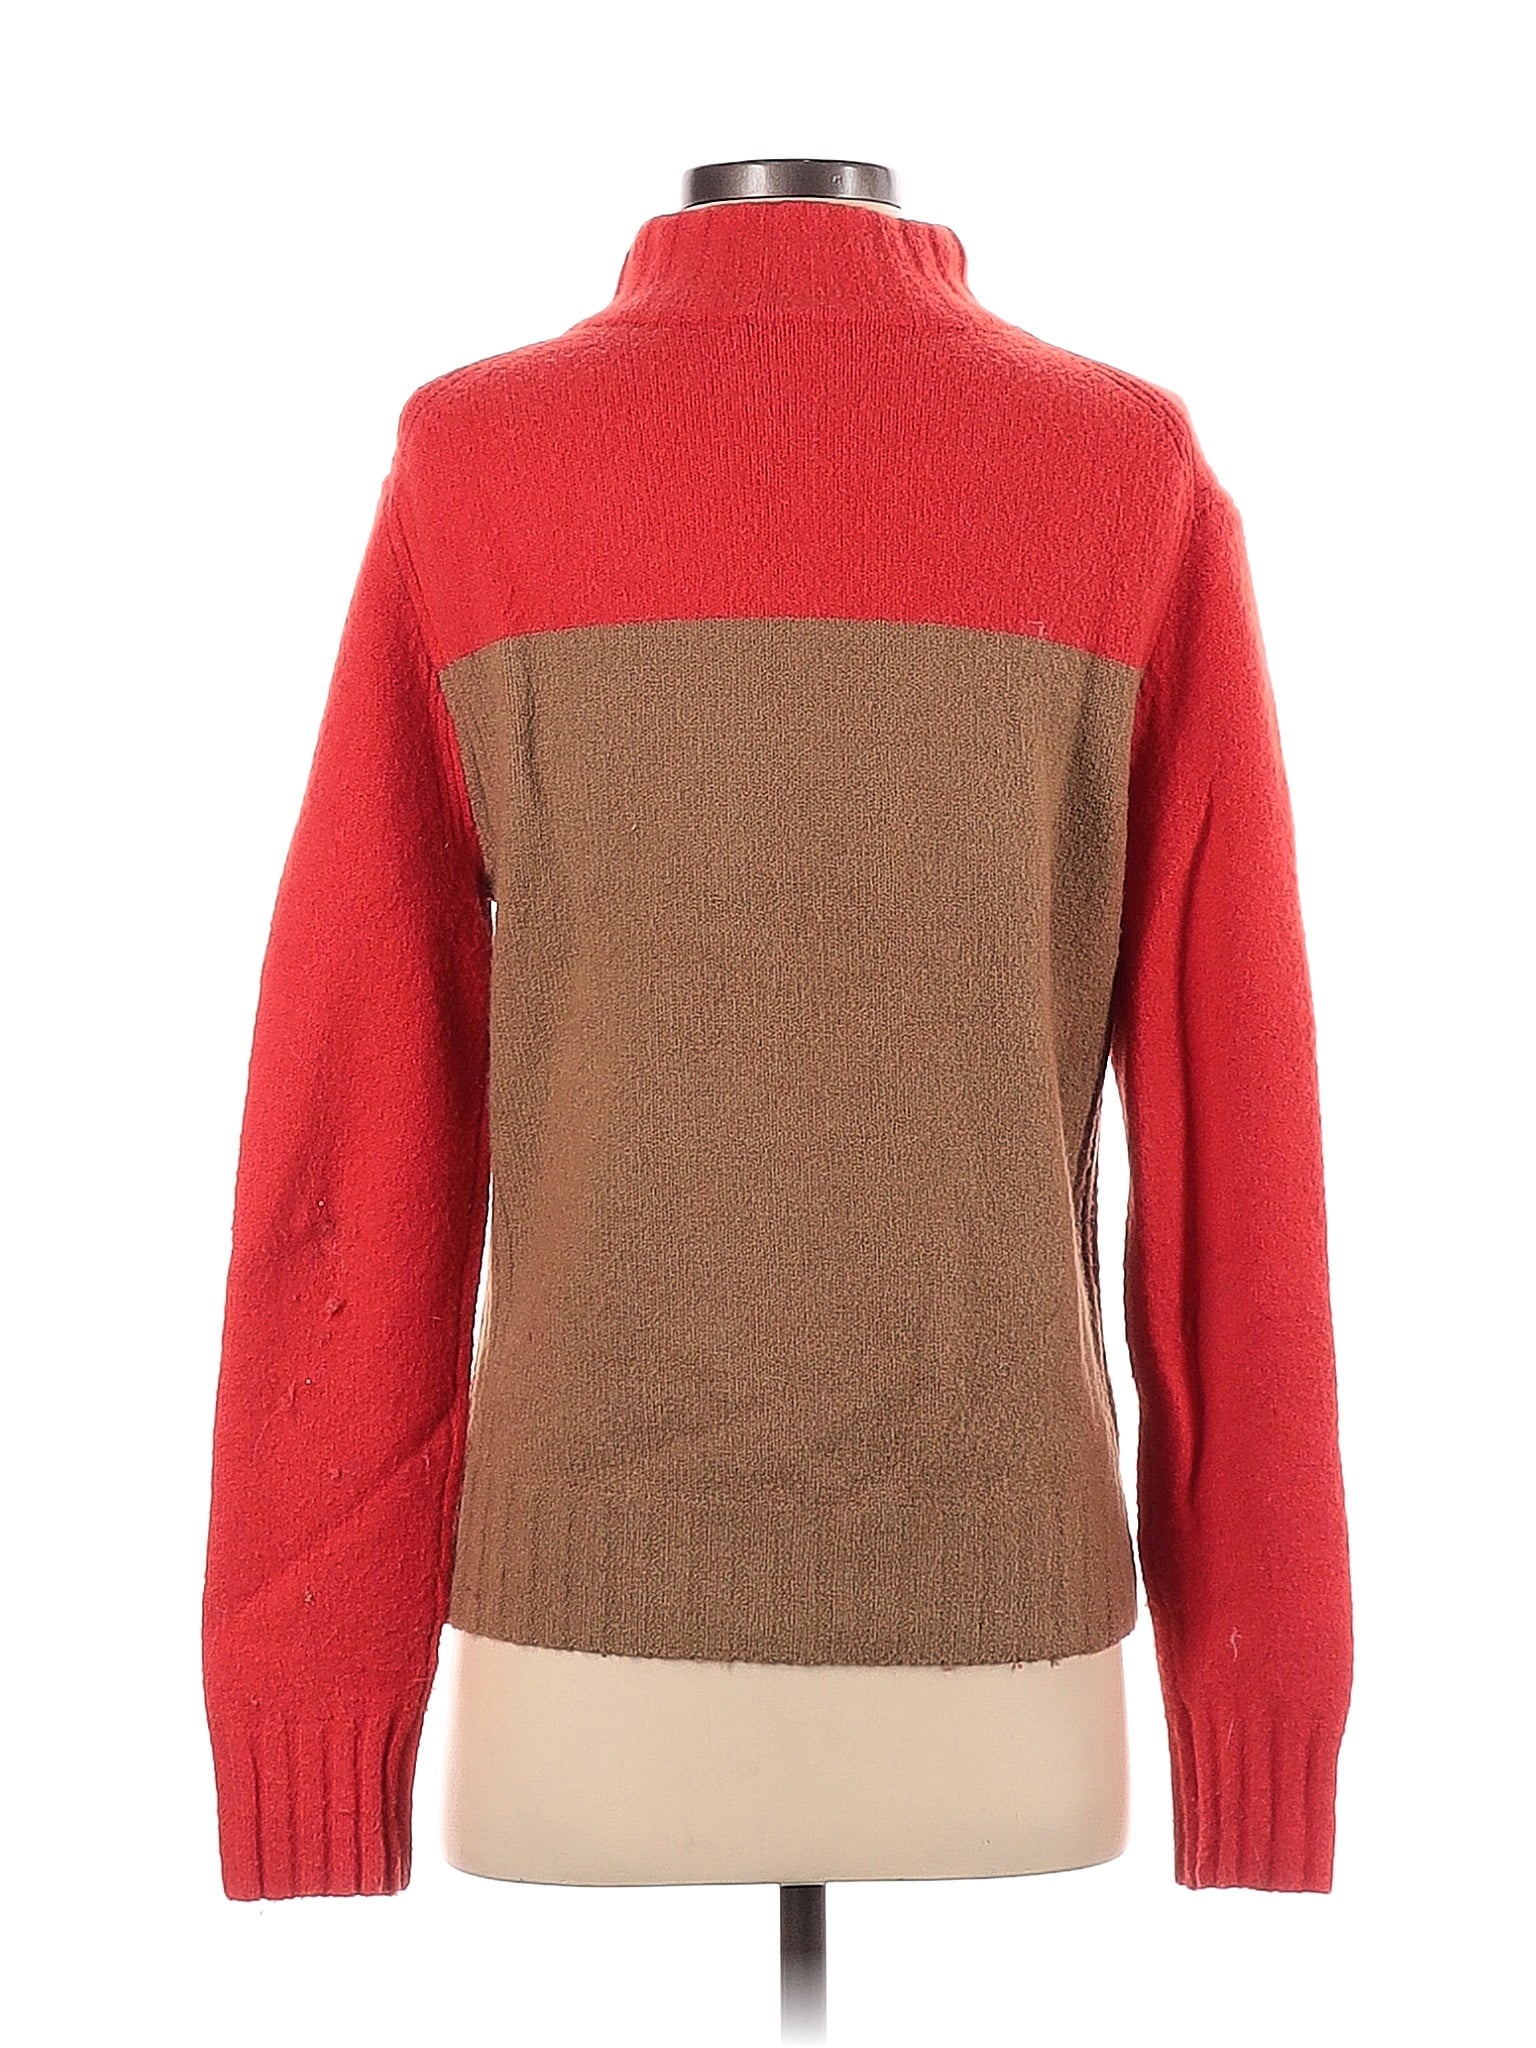 Turtleneck Sweater size - S